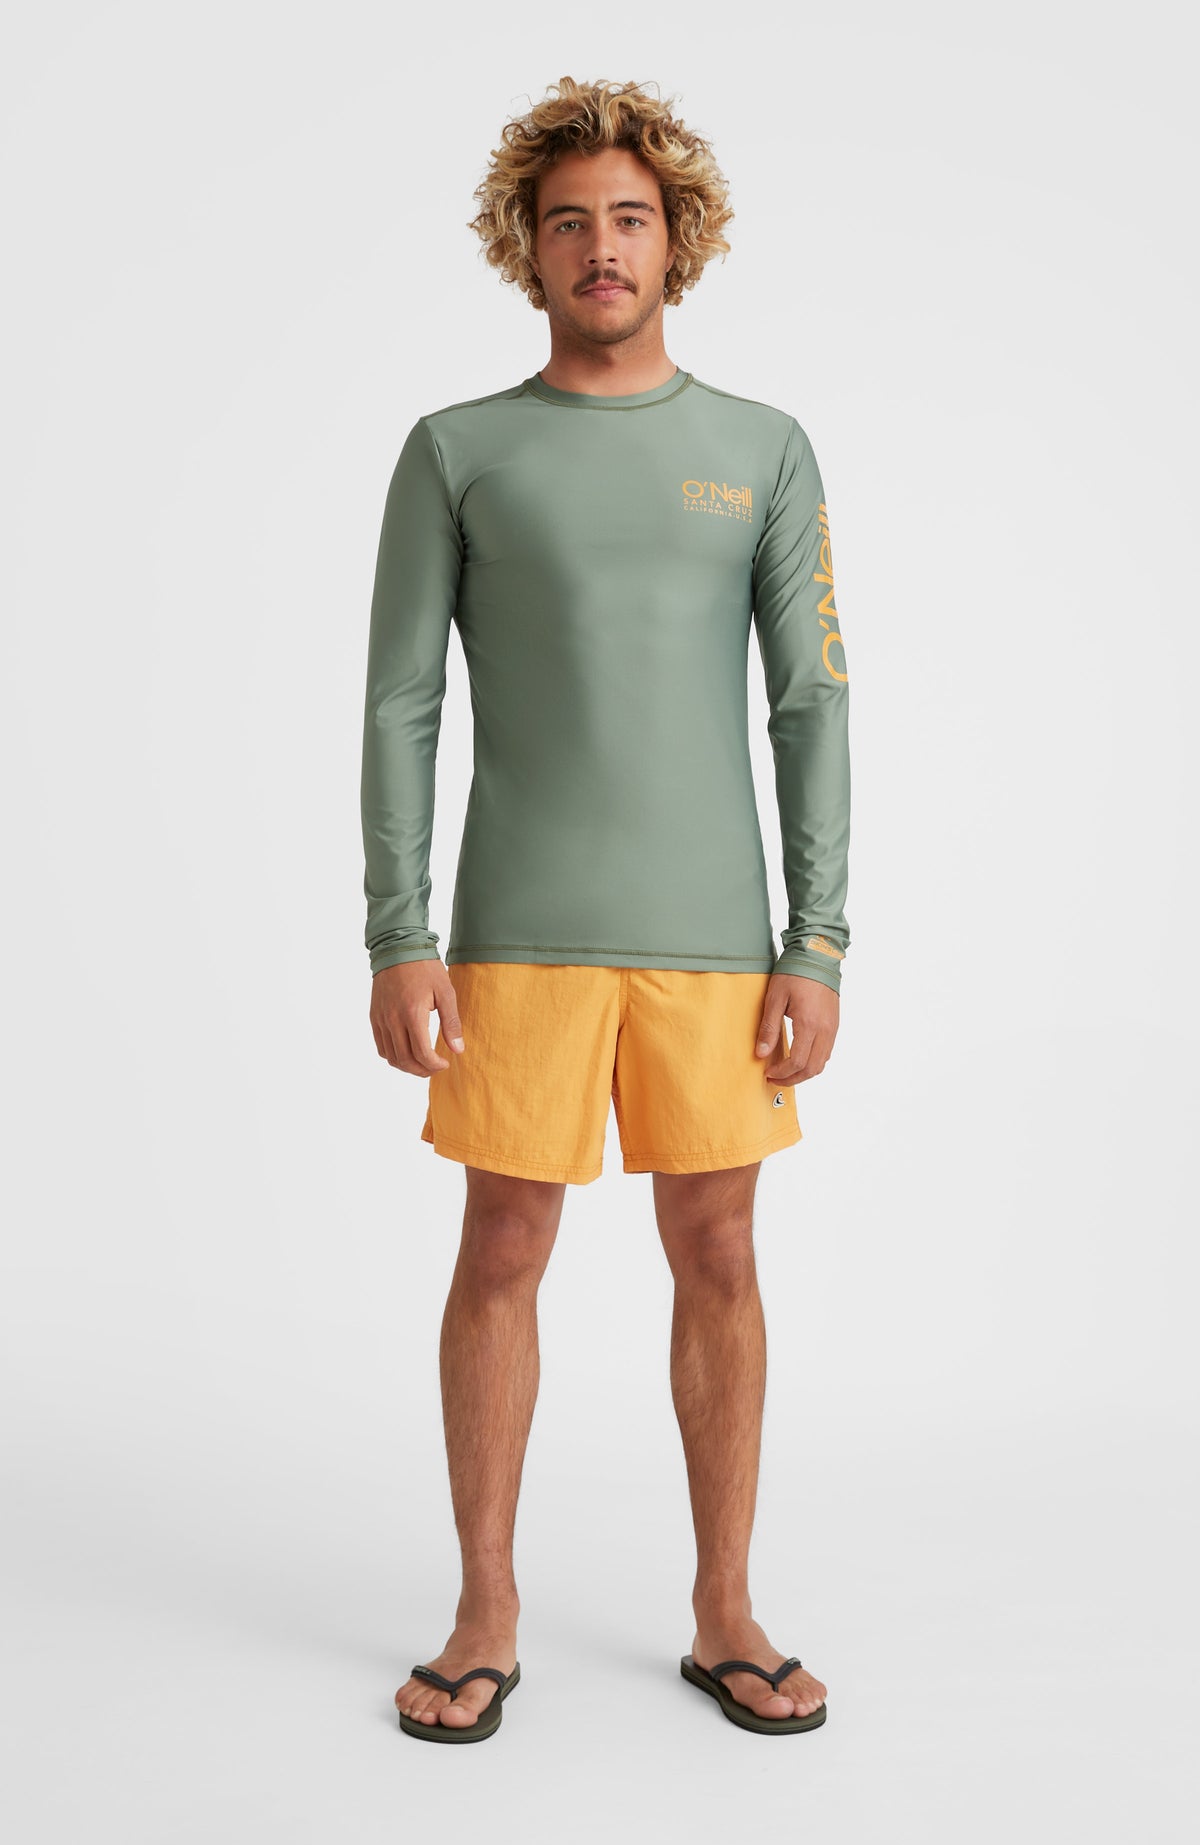 SALE - Loose Fit Longsleeve Sailfish 50 SPF Sun Shirt